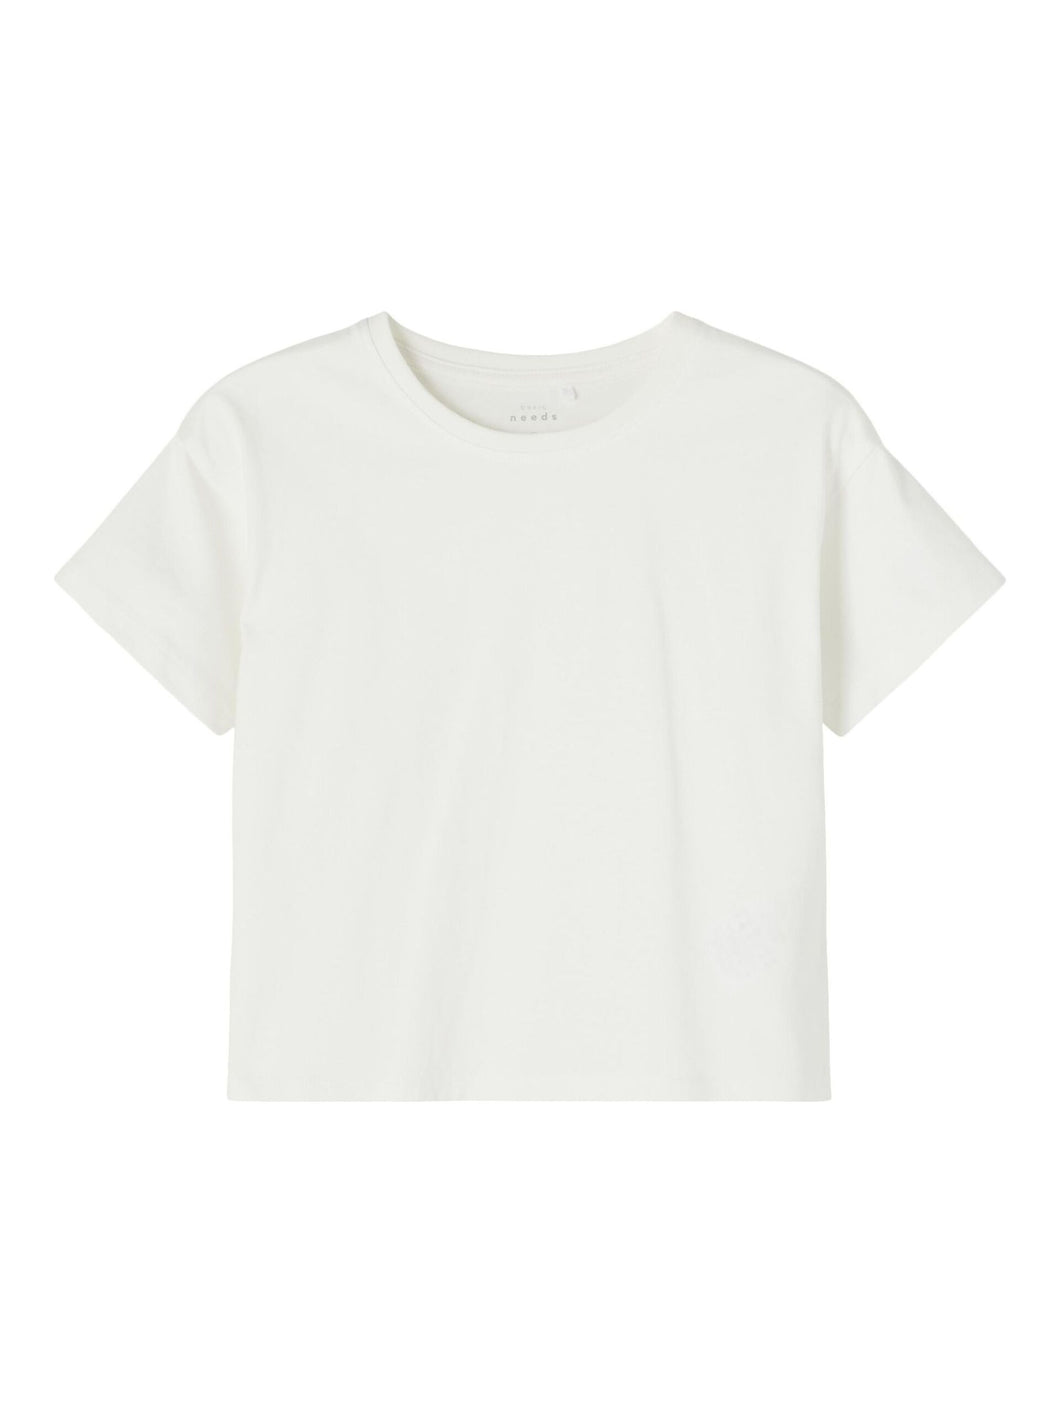 Shirt Short, 3 colors